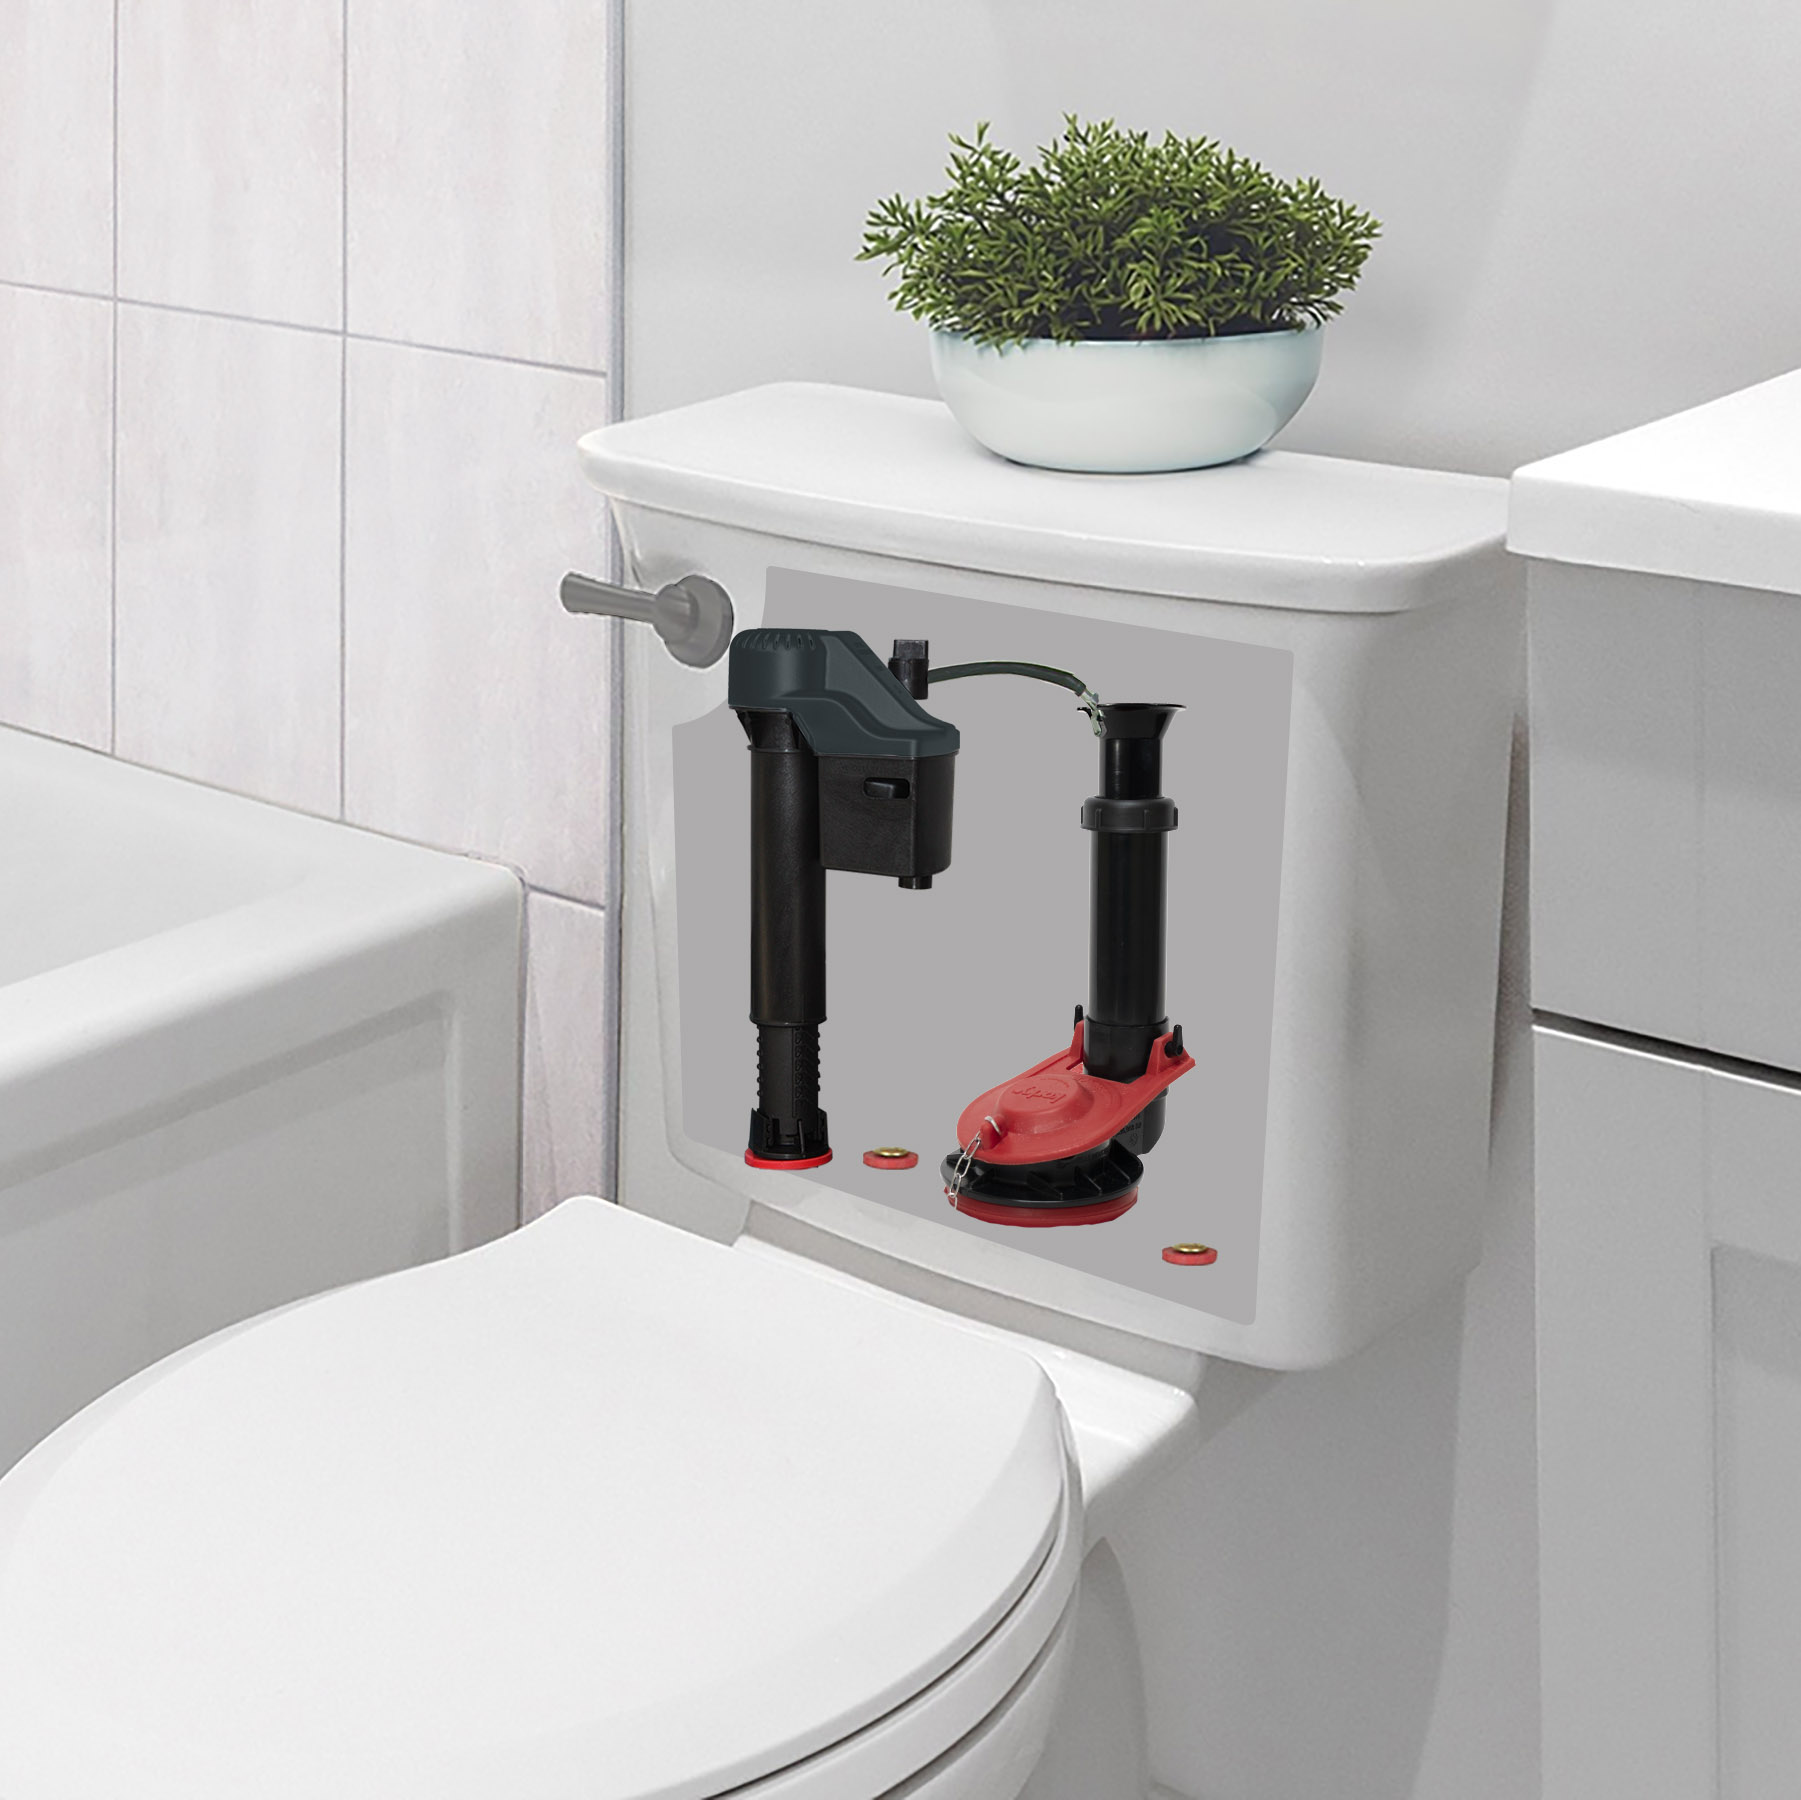 4010X Toilet Repair kit in toilet tank